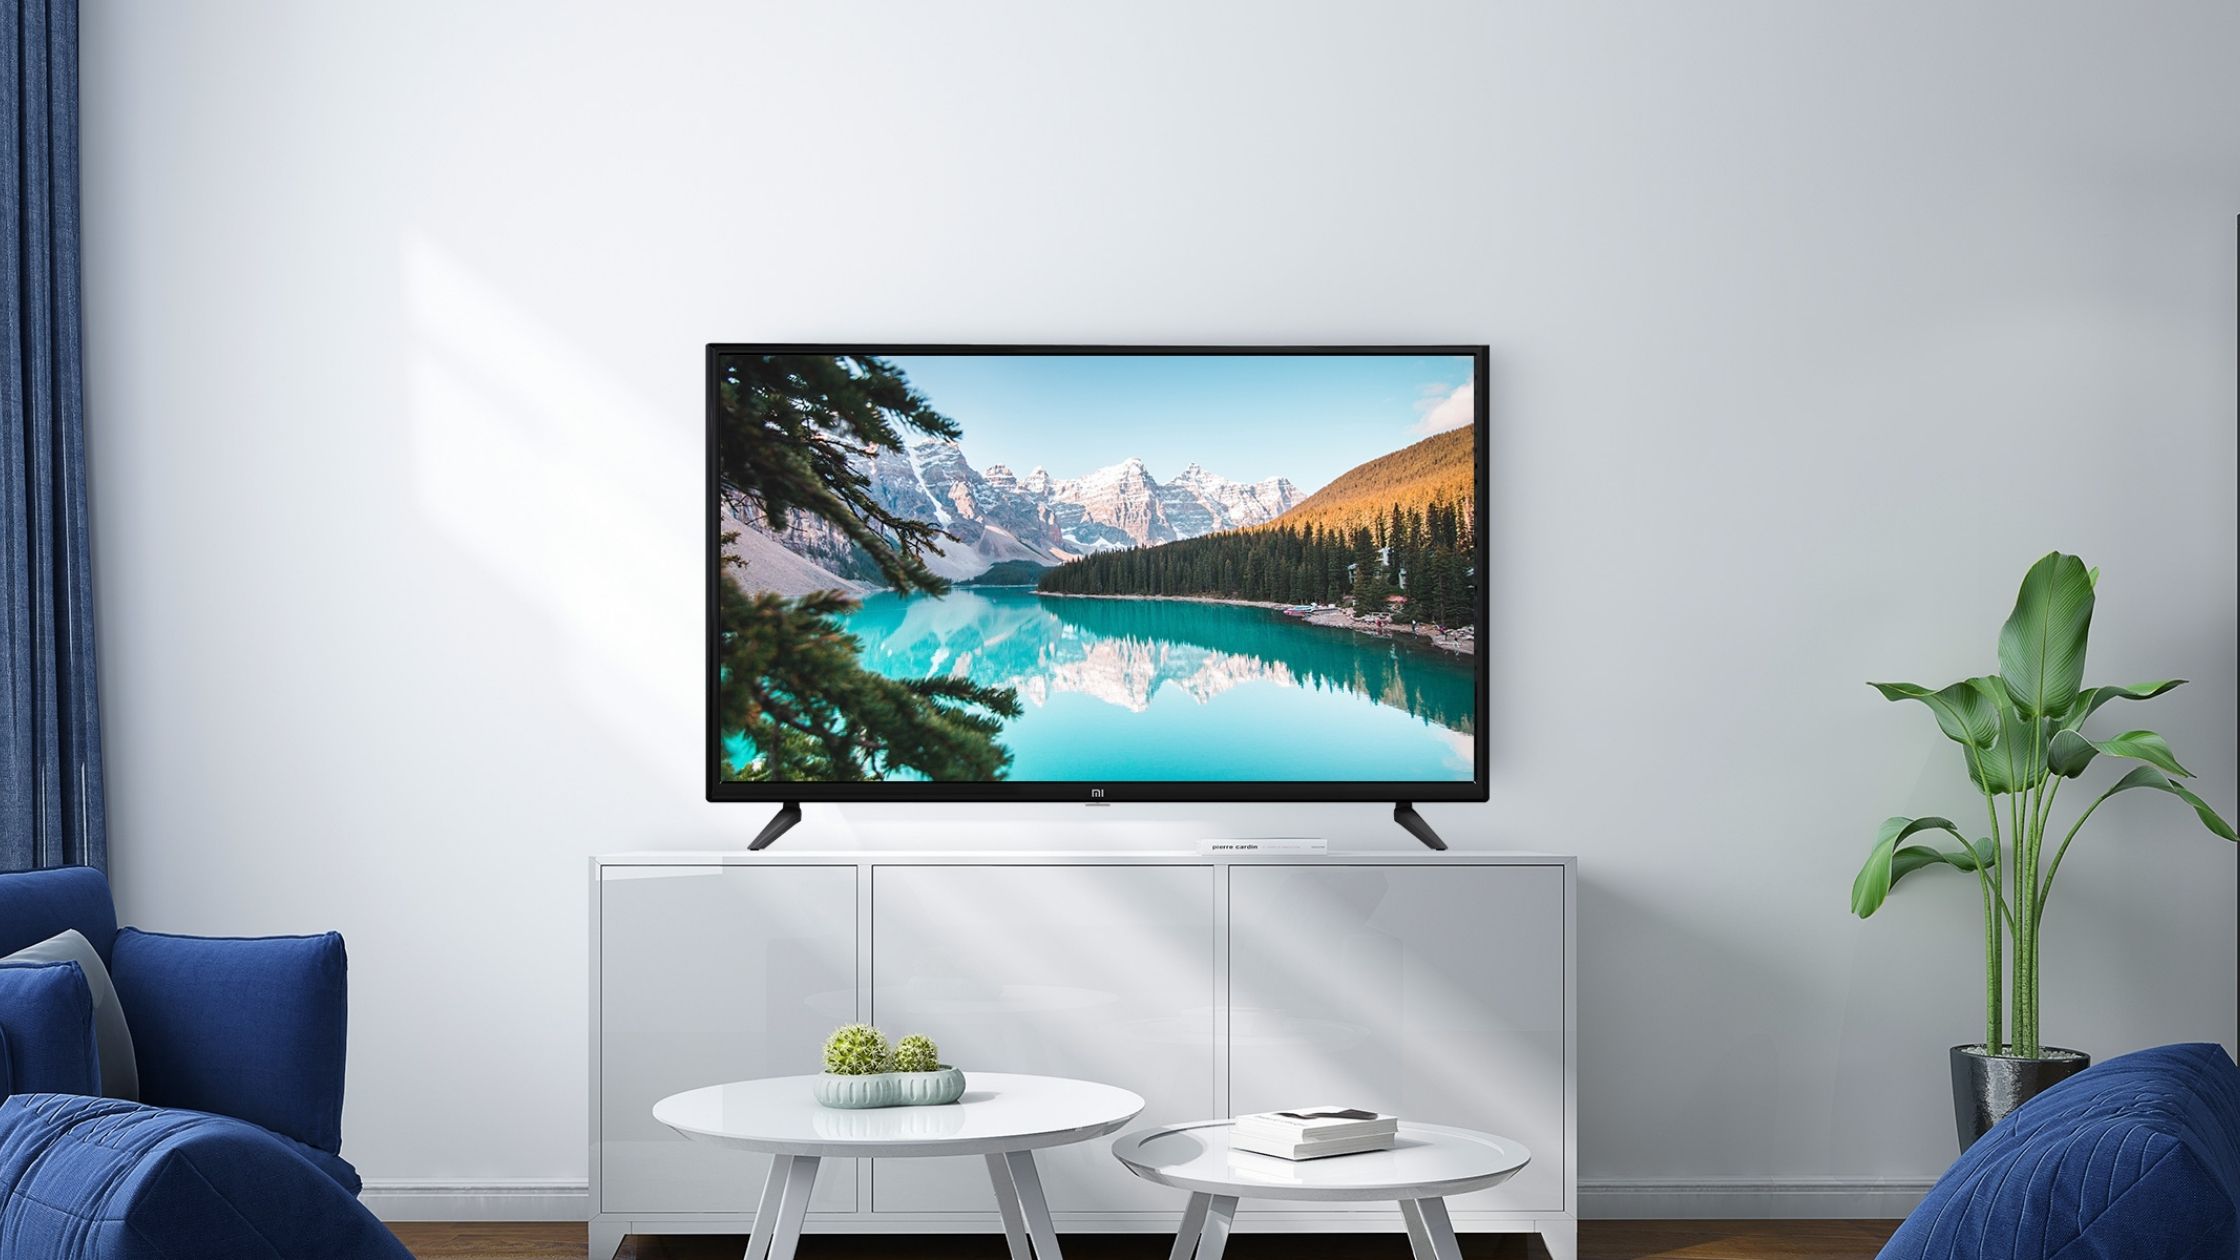 32 Inch Tv Good For Living Room